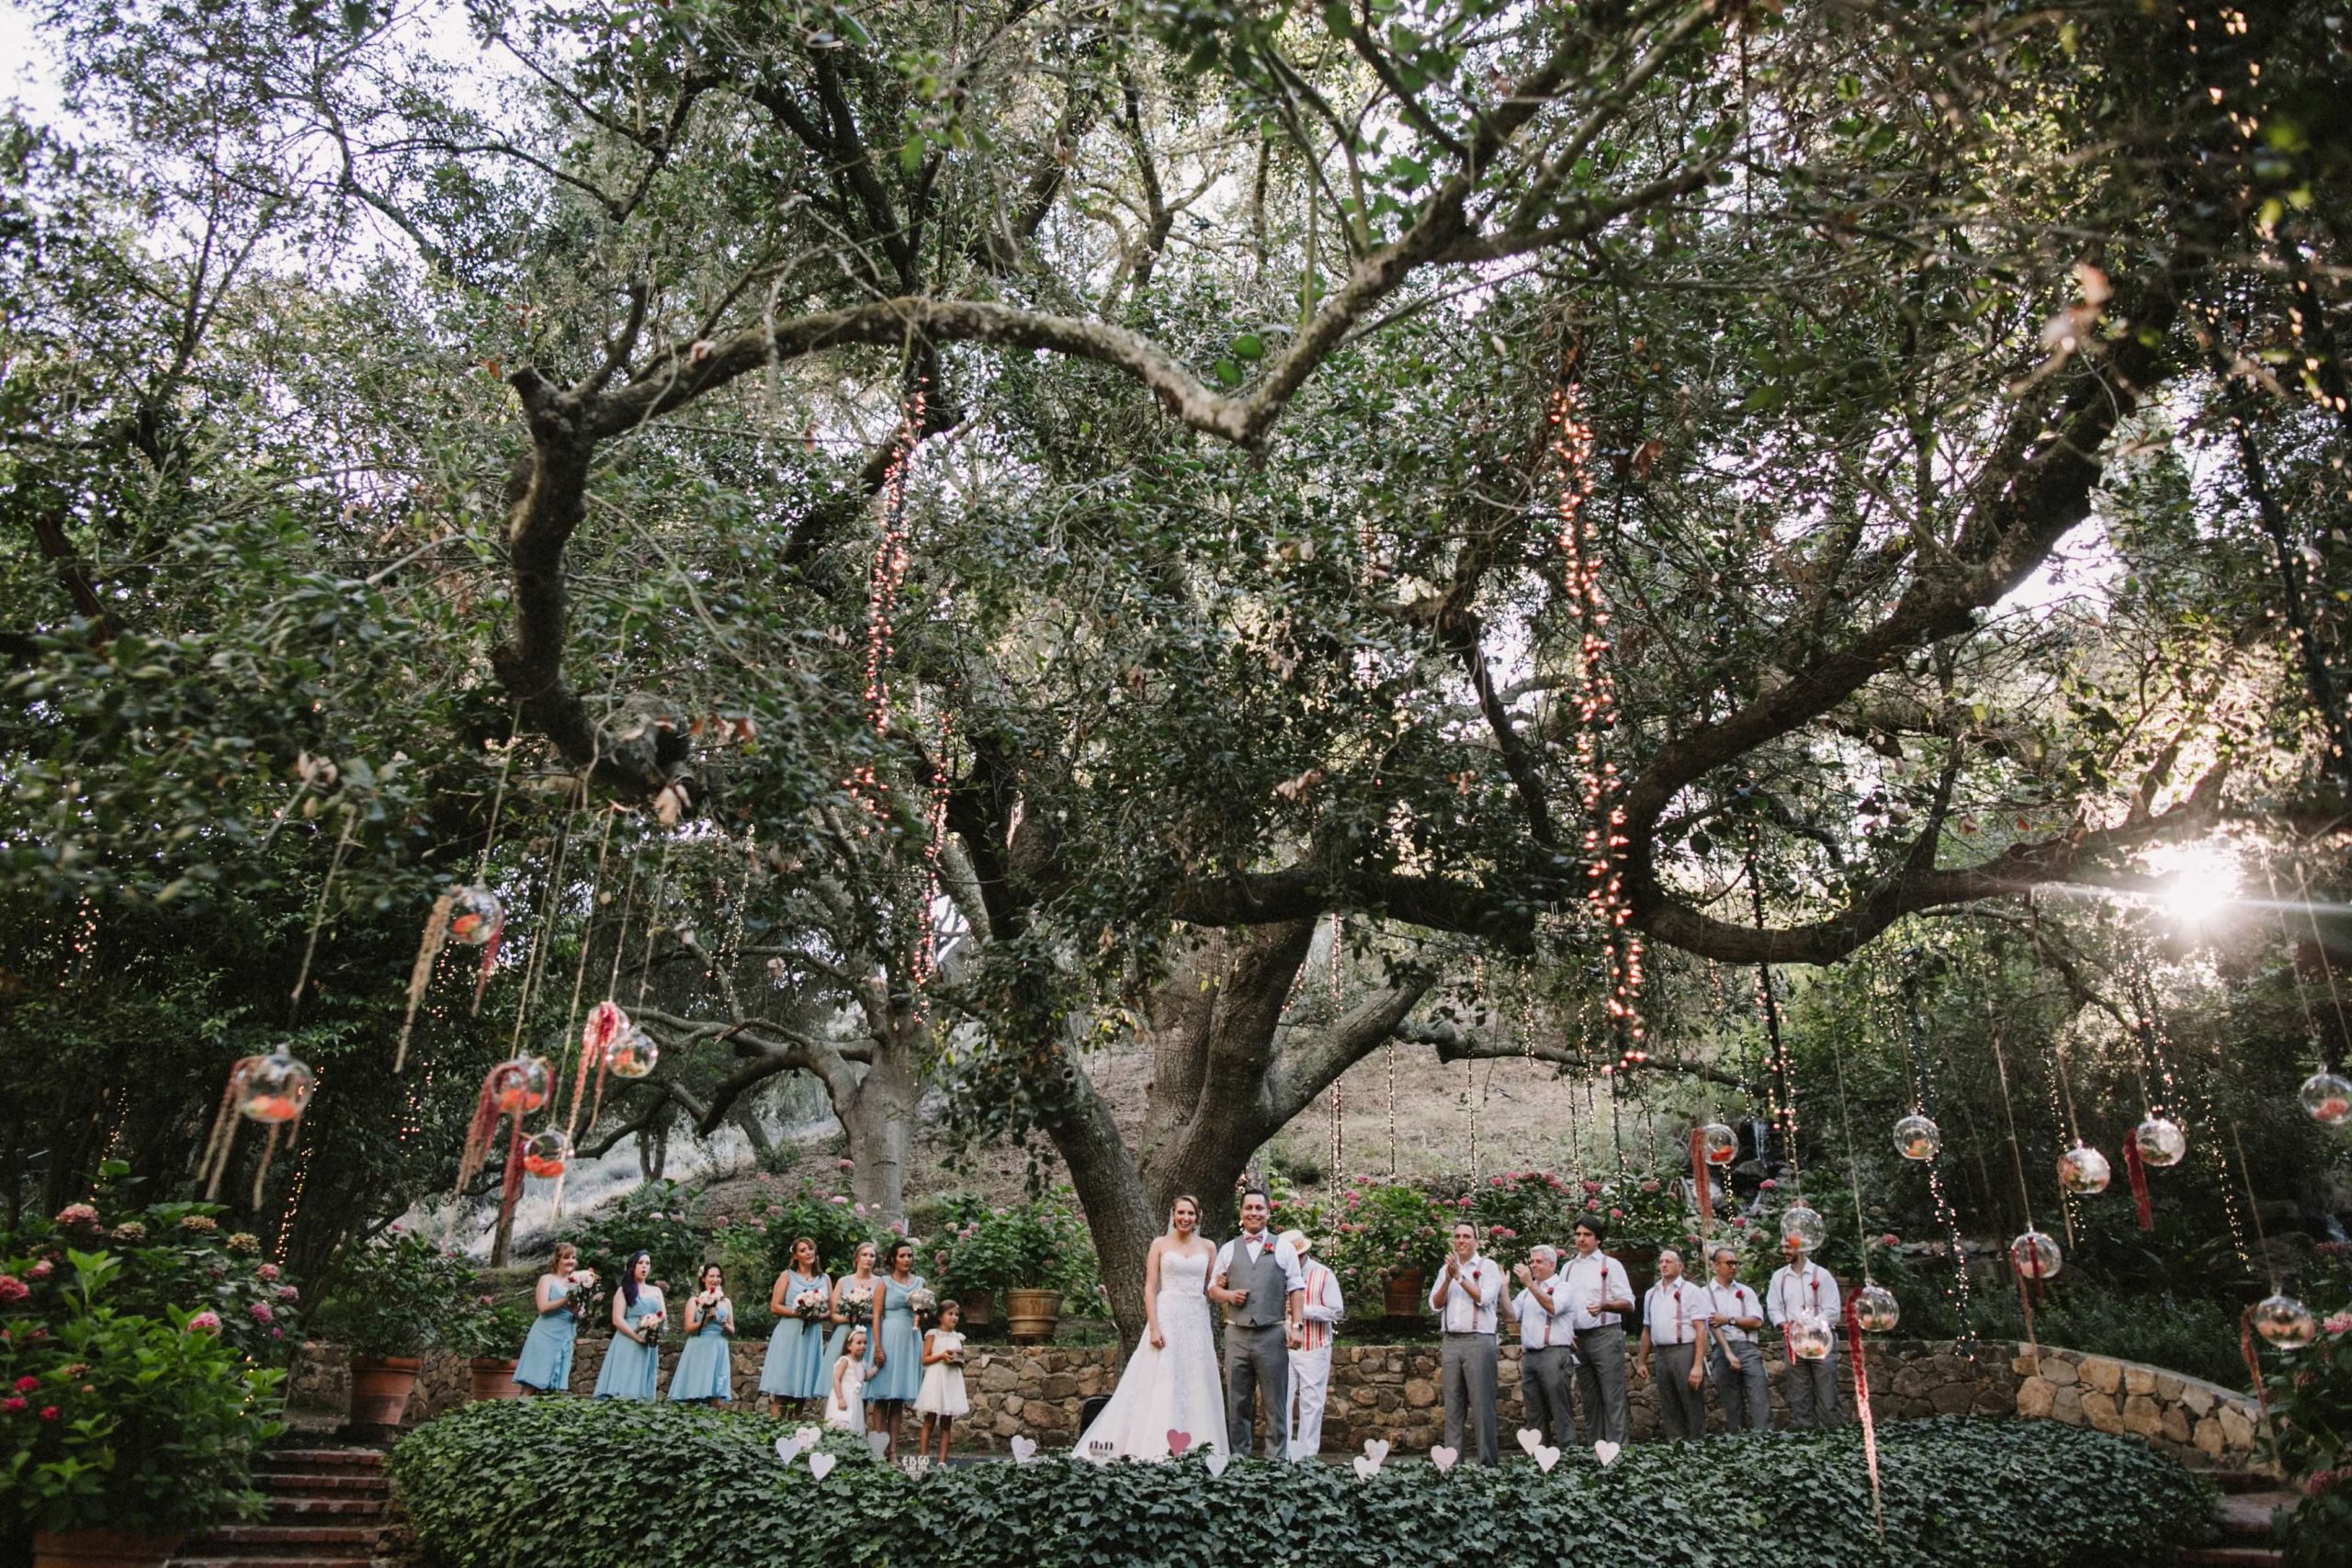 Bridal Party standing below a storybook tree